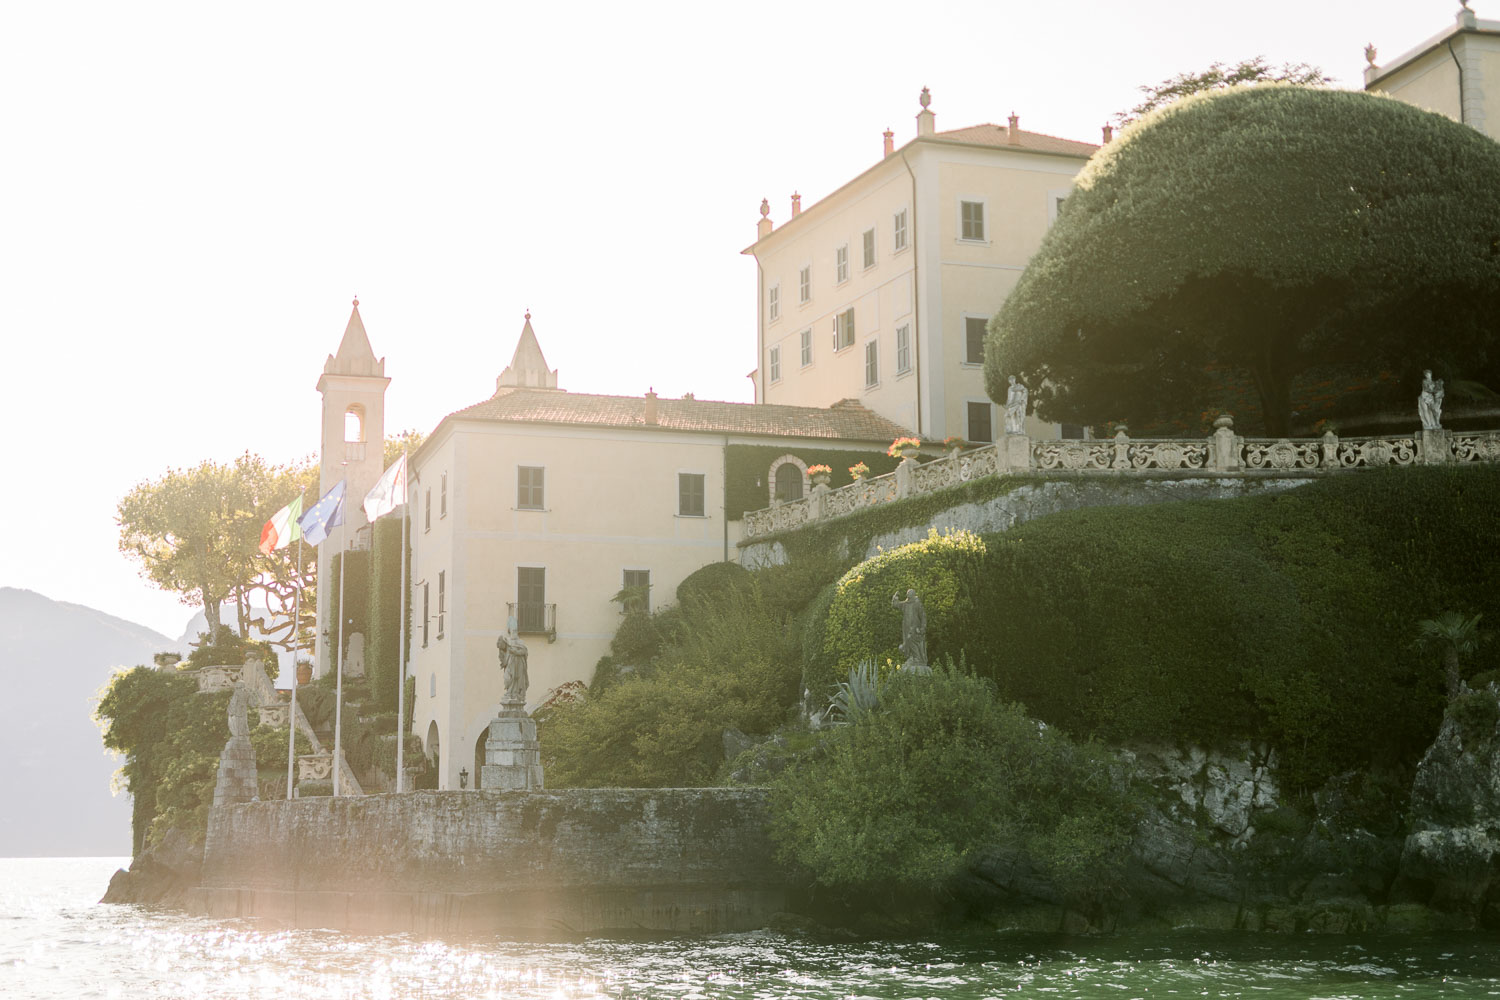 Lake Como villa Balbianelo Explore Italy Favourite Wedding Venues